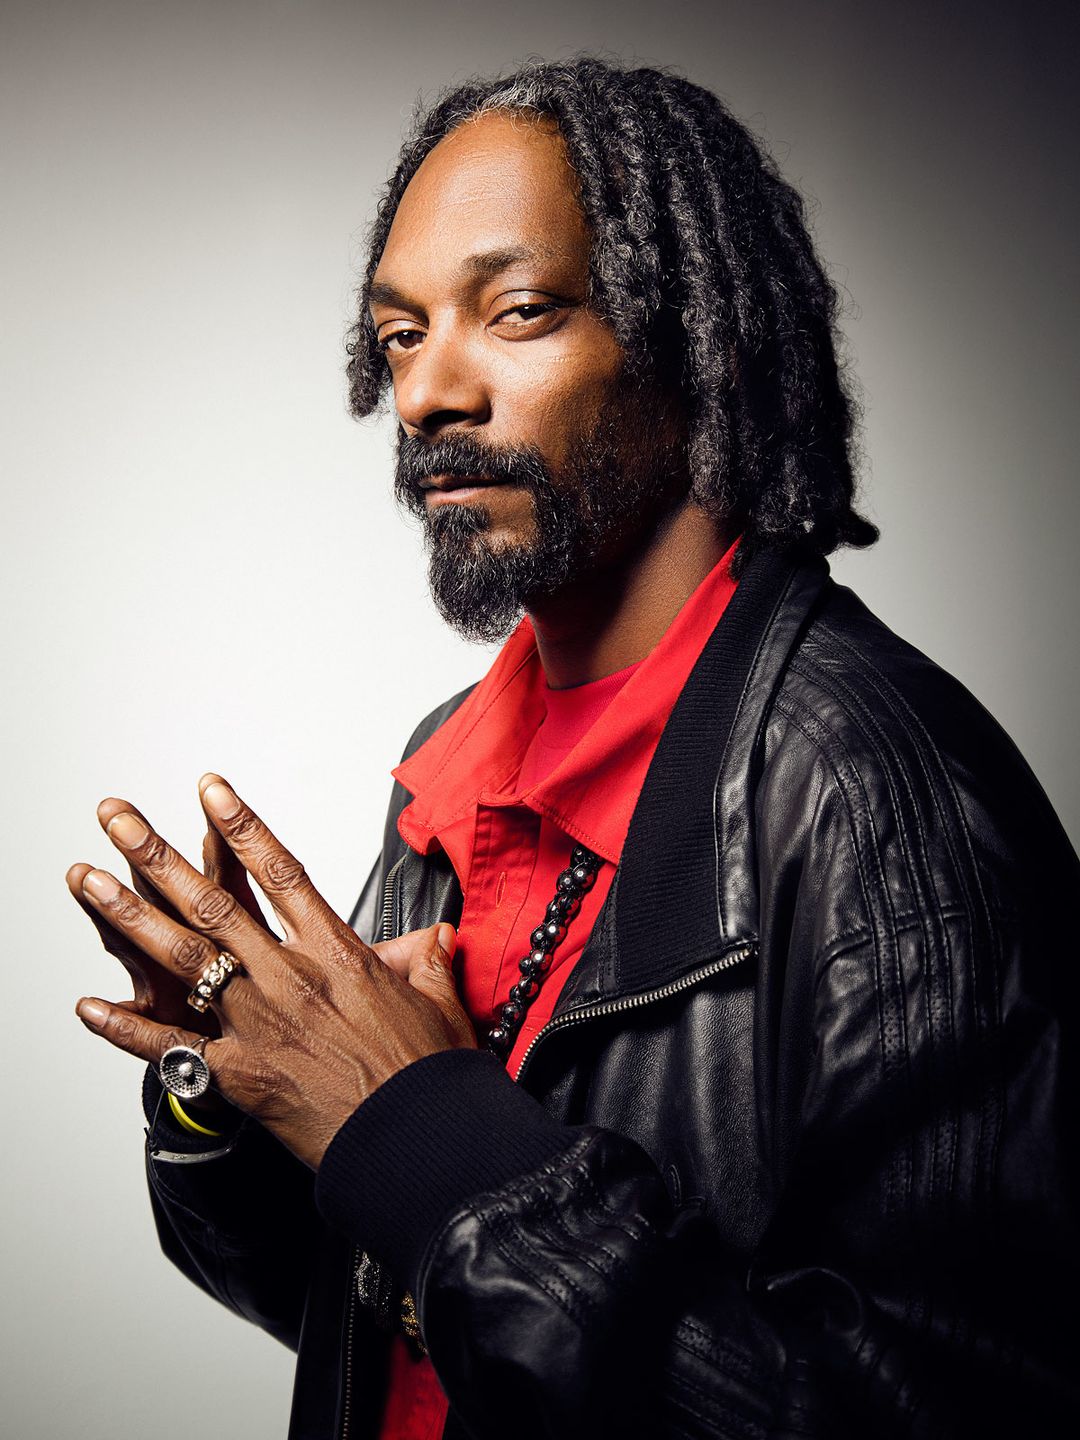 Snoop Dogg date of birth